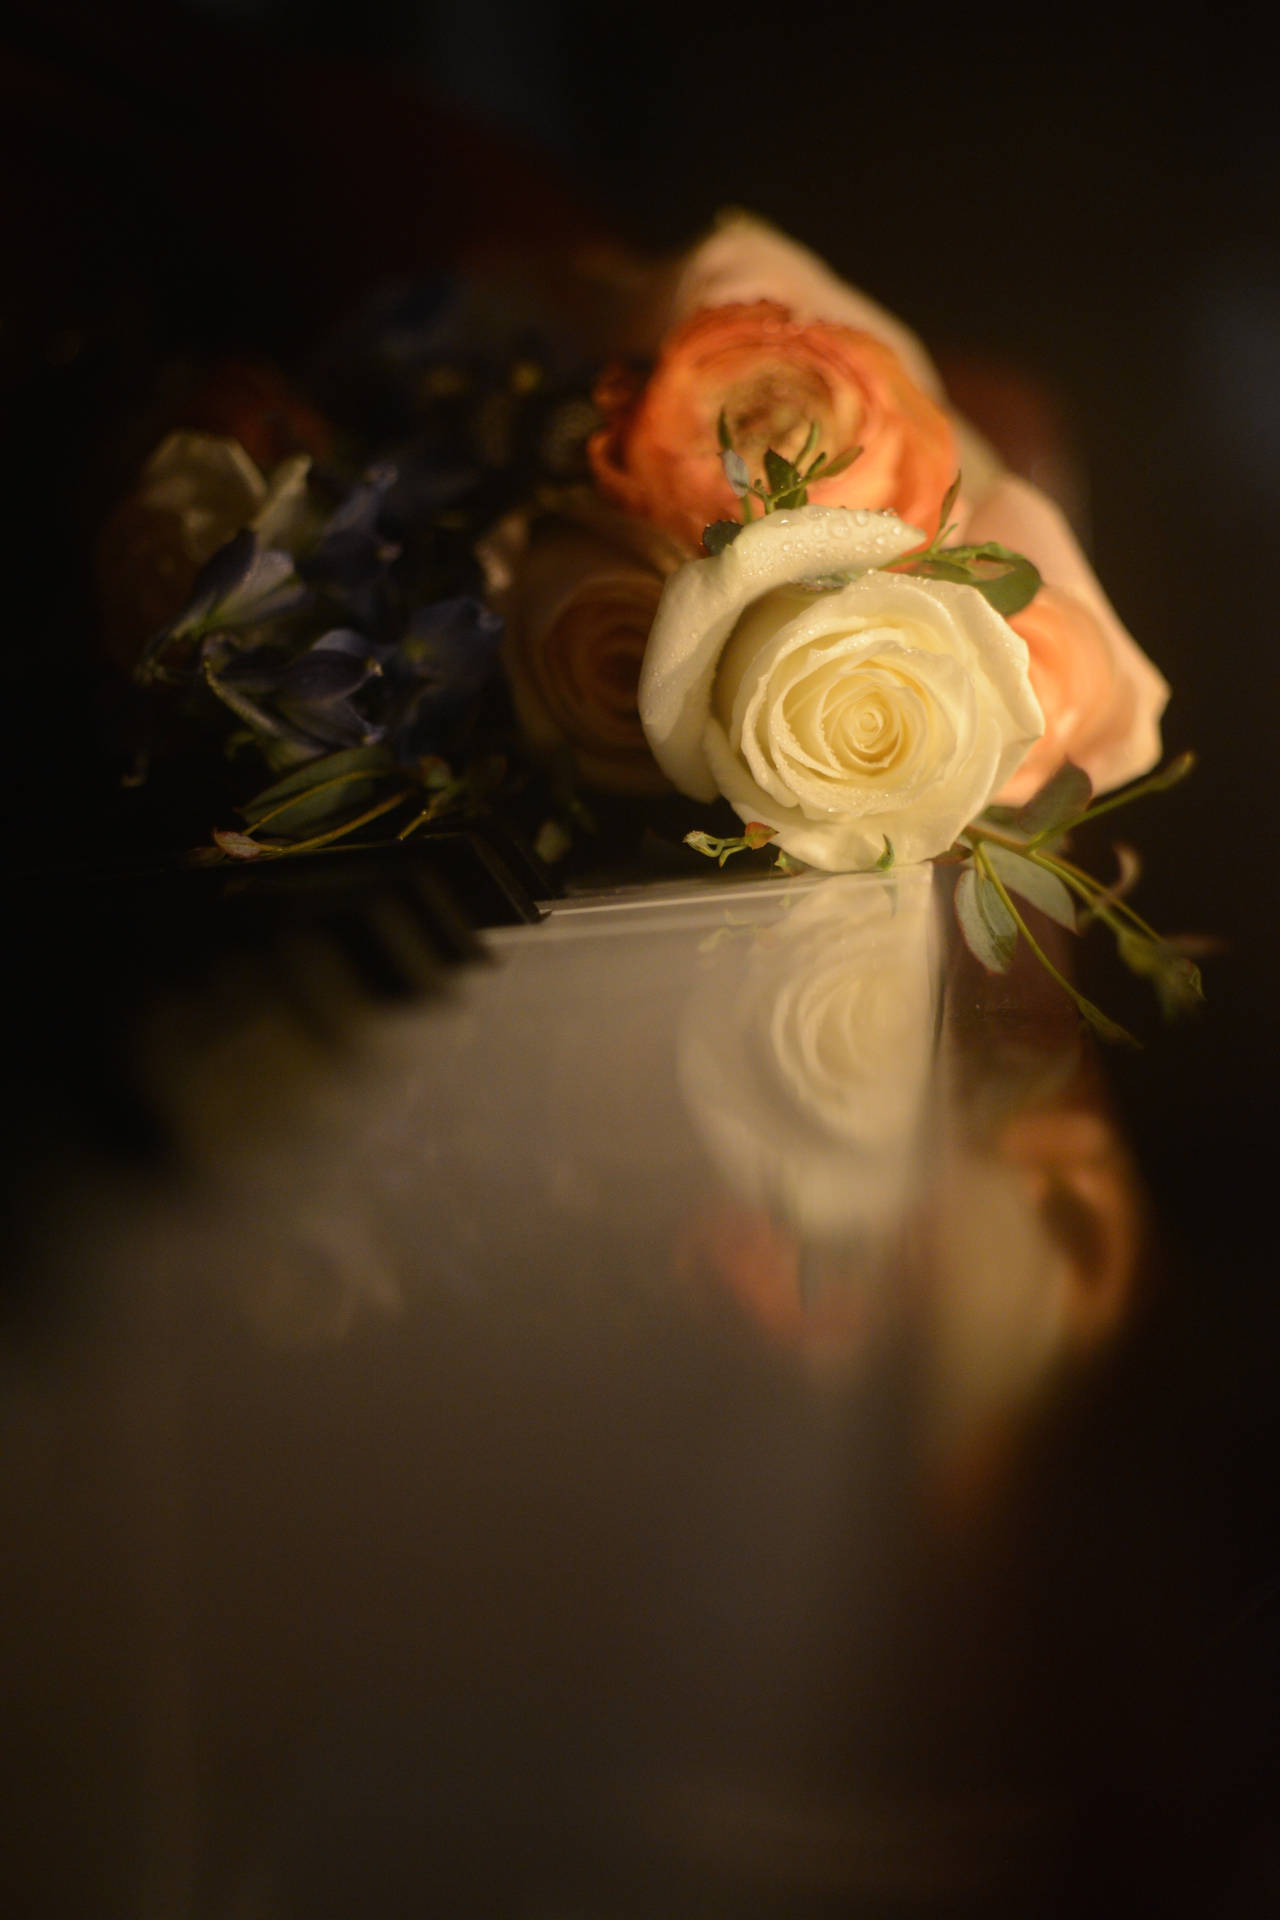 Romantic Roses On Piano Keys Background